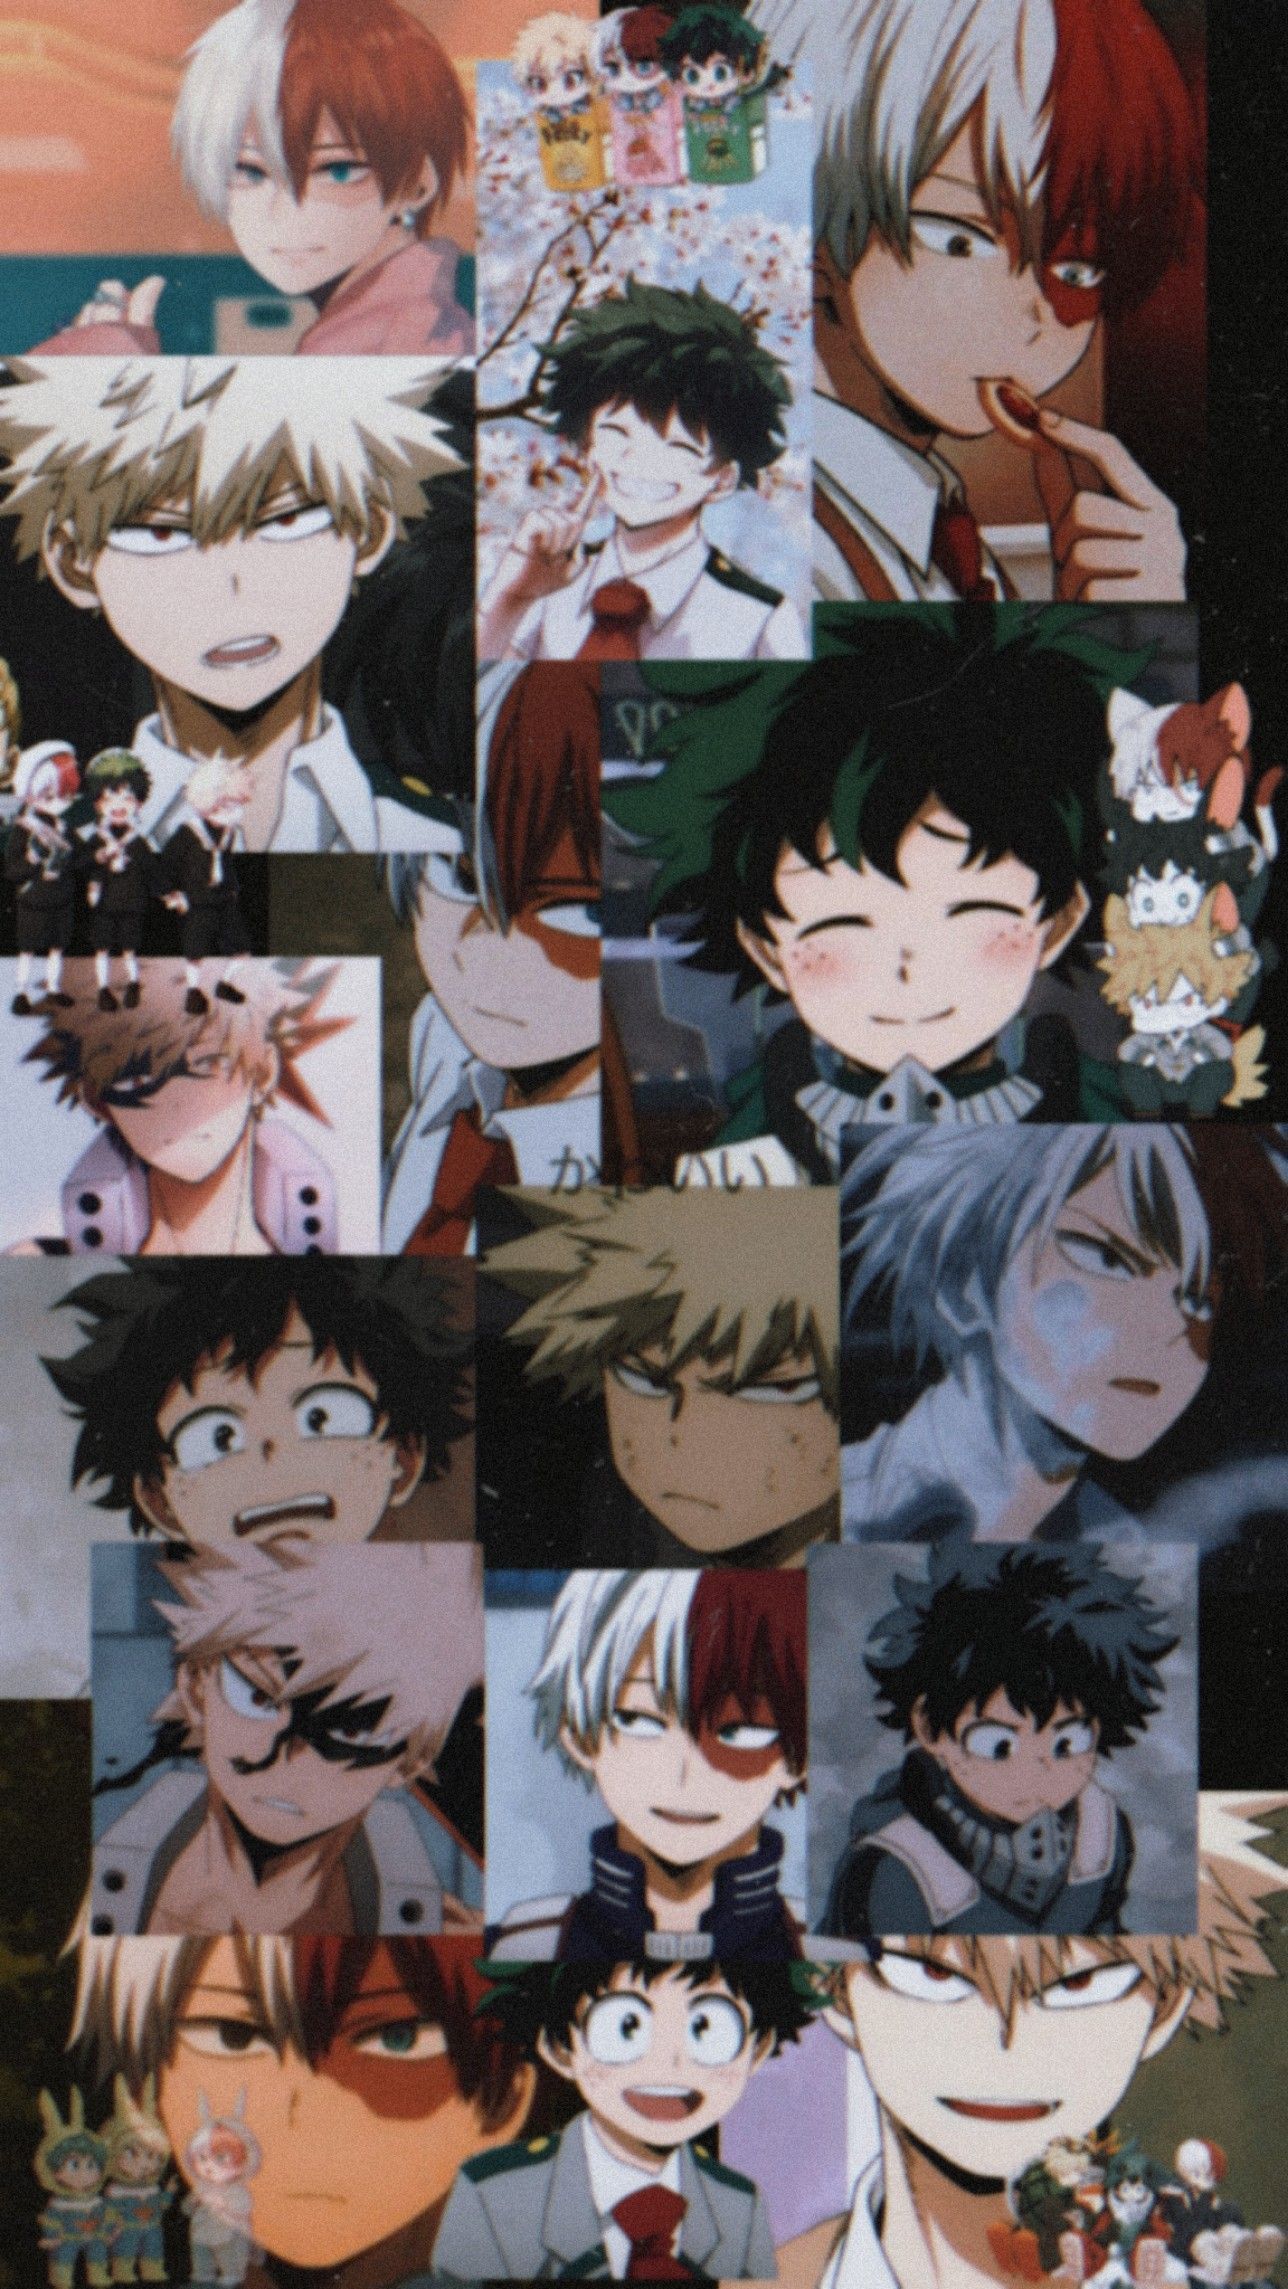 Boku no hero academia wallpaper. Cute anime wallpaper, Hero wallpaper, Anime wallpaper